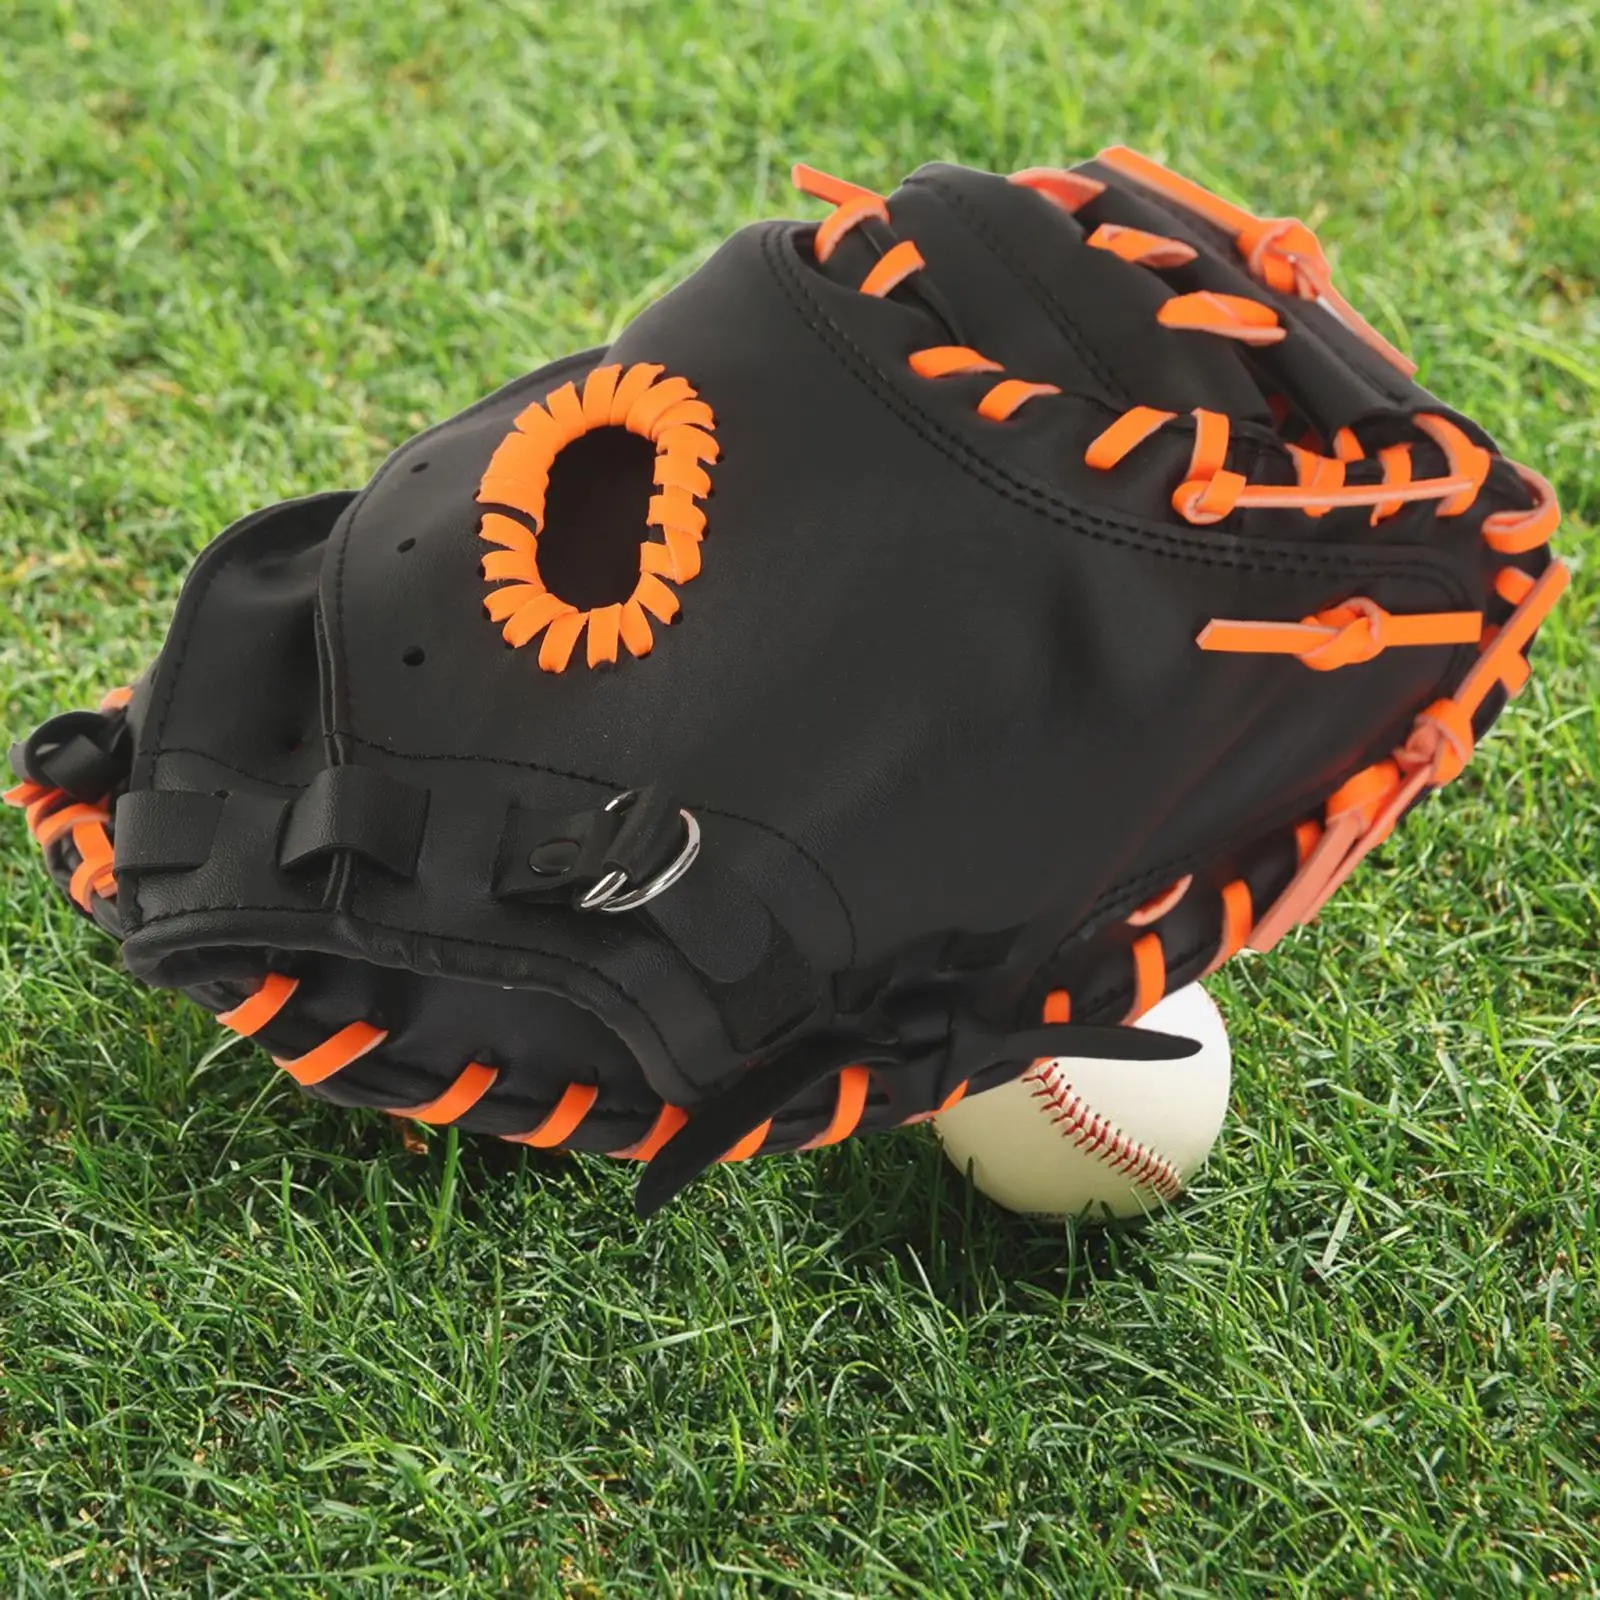 Sports Baseball Glove Durable Comfortable PU Teeball Gloves Baseball Softball Fielding Glove Batting Glove for Beginner Adults